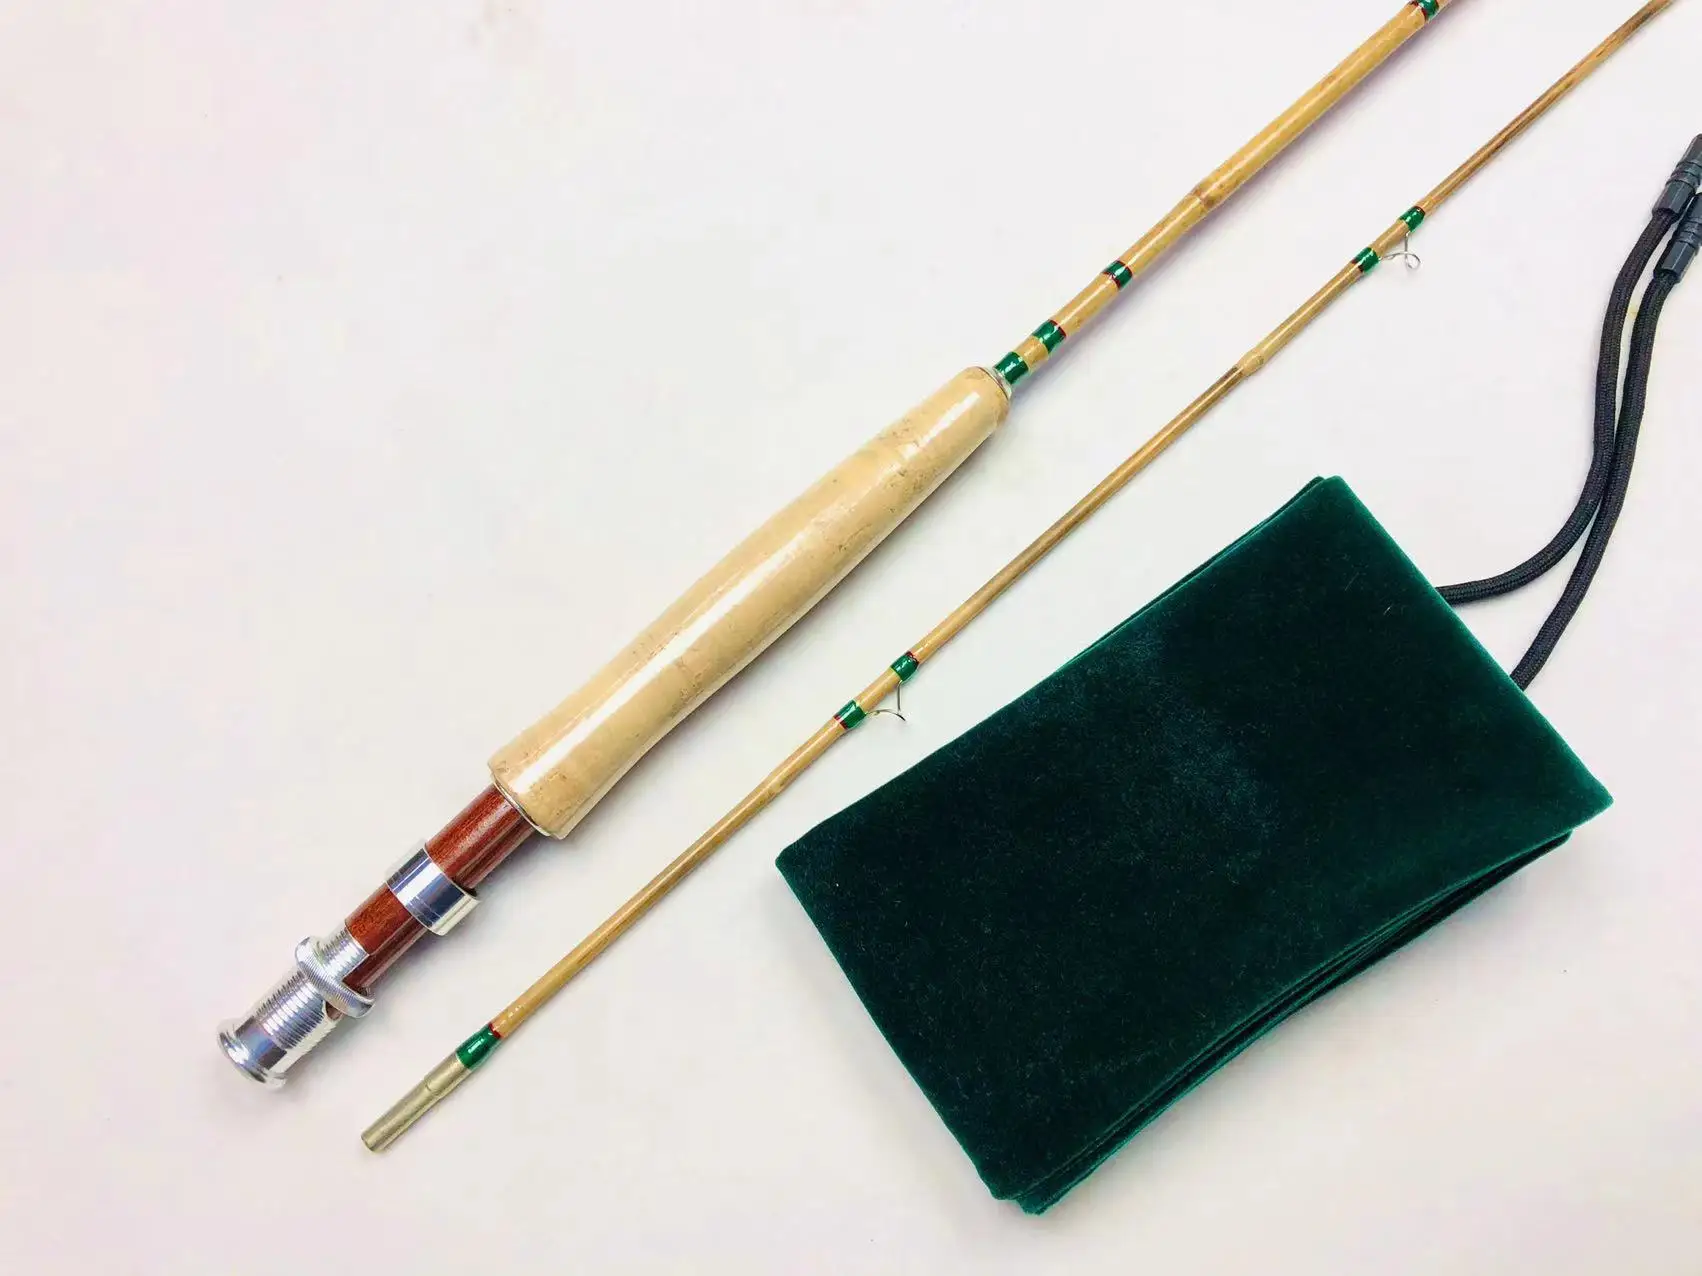 (Samo jedan set) Ribarski štap od divljeg bambusa 7 METARA 9 inča - 4 težina / Štapove i štapovi za ribolov ribolov / Vintage / Eko-friendly